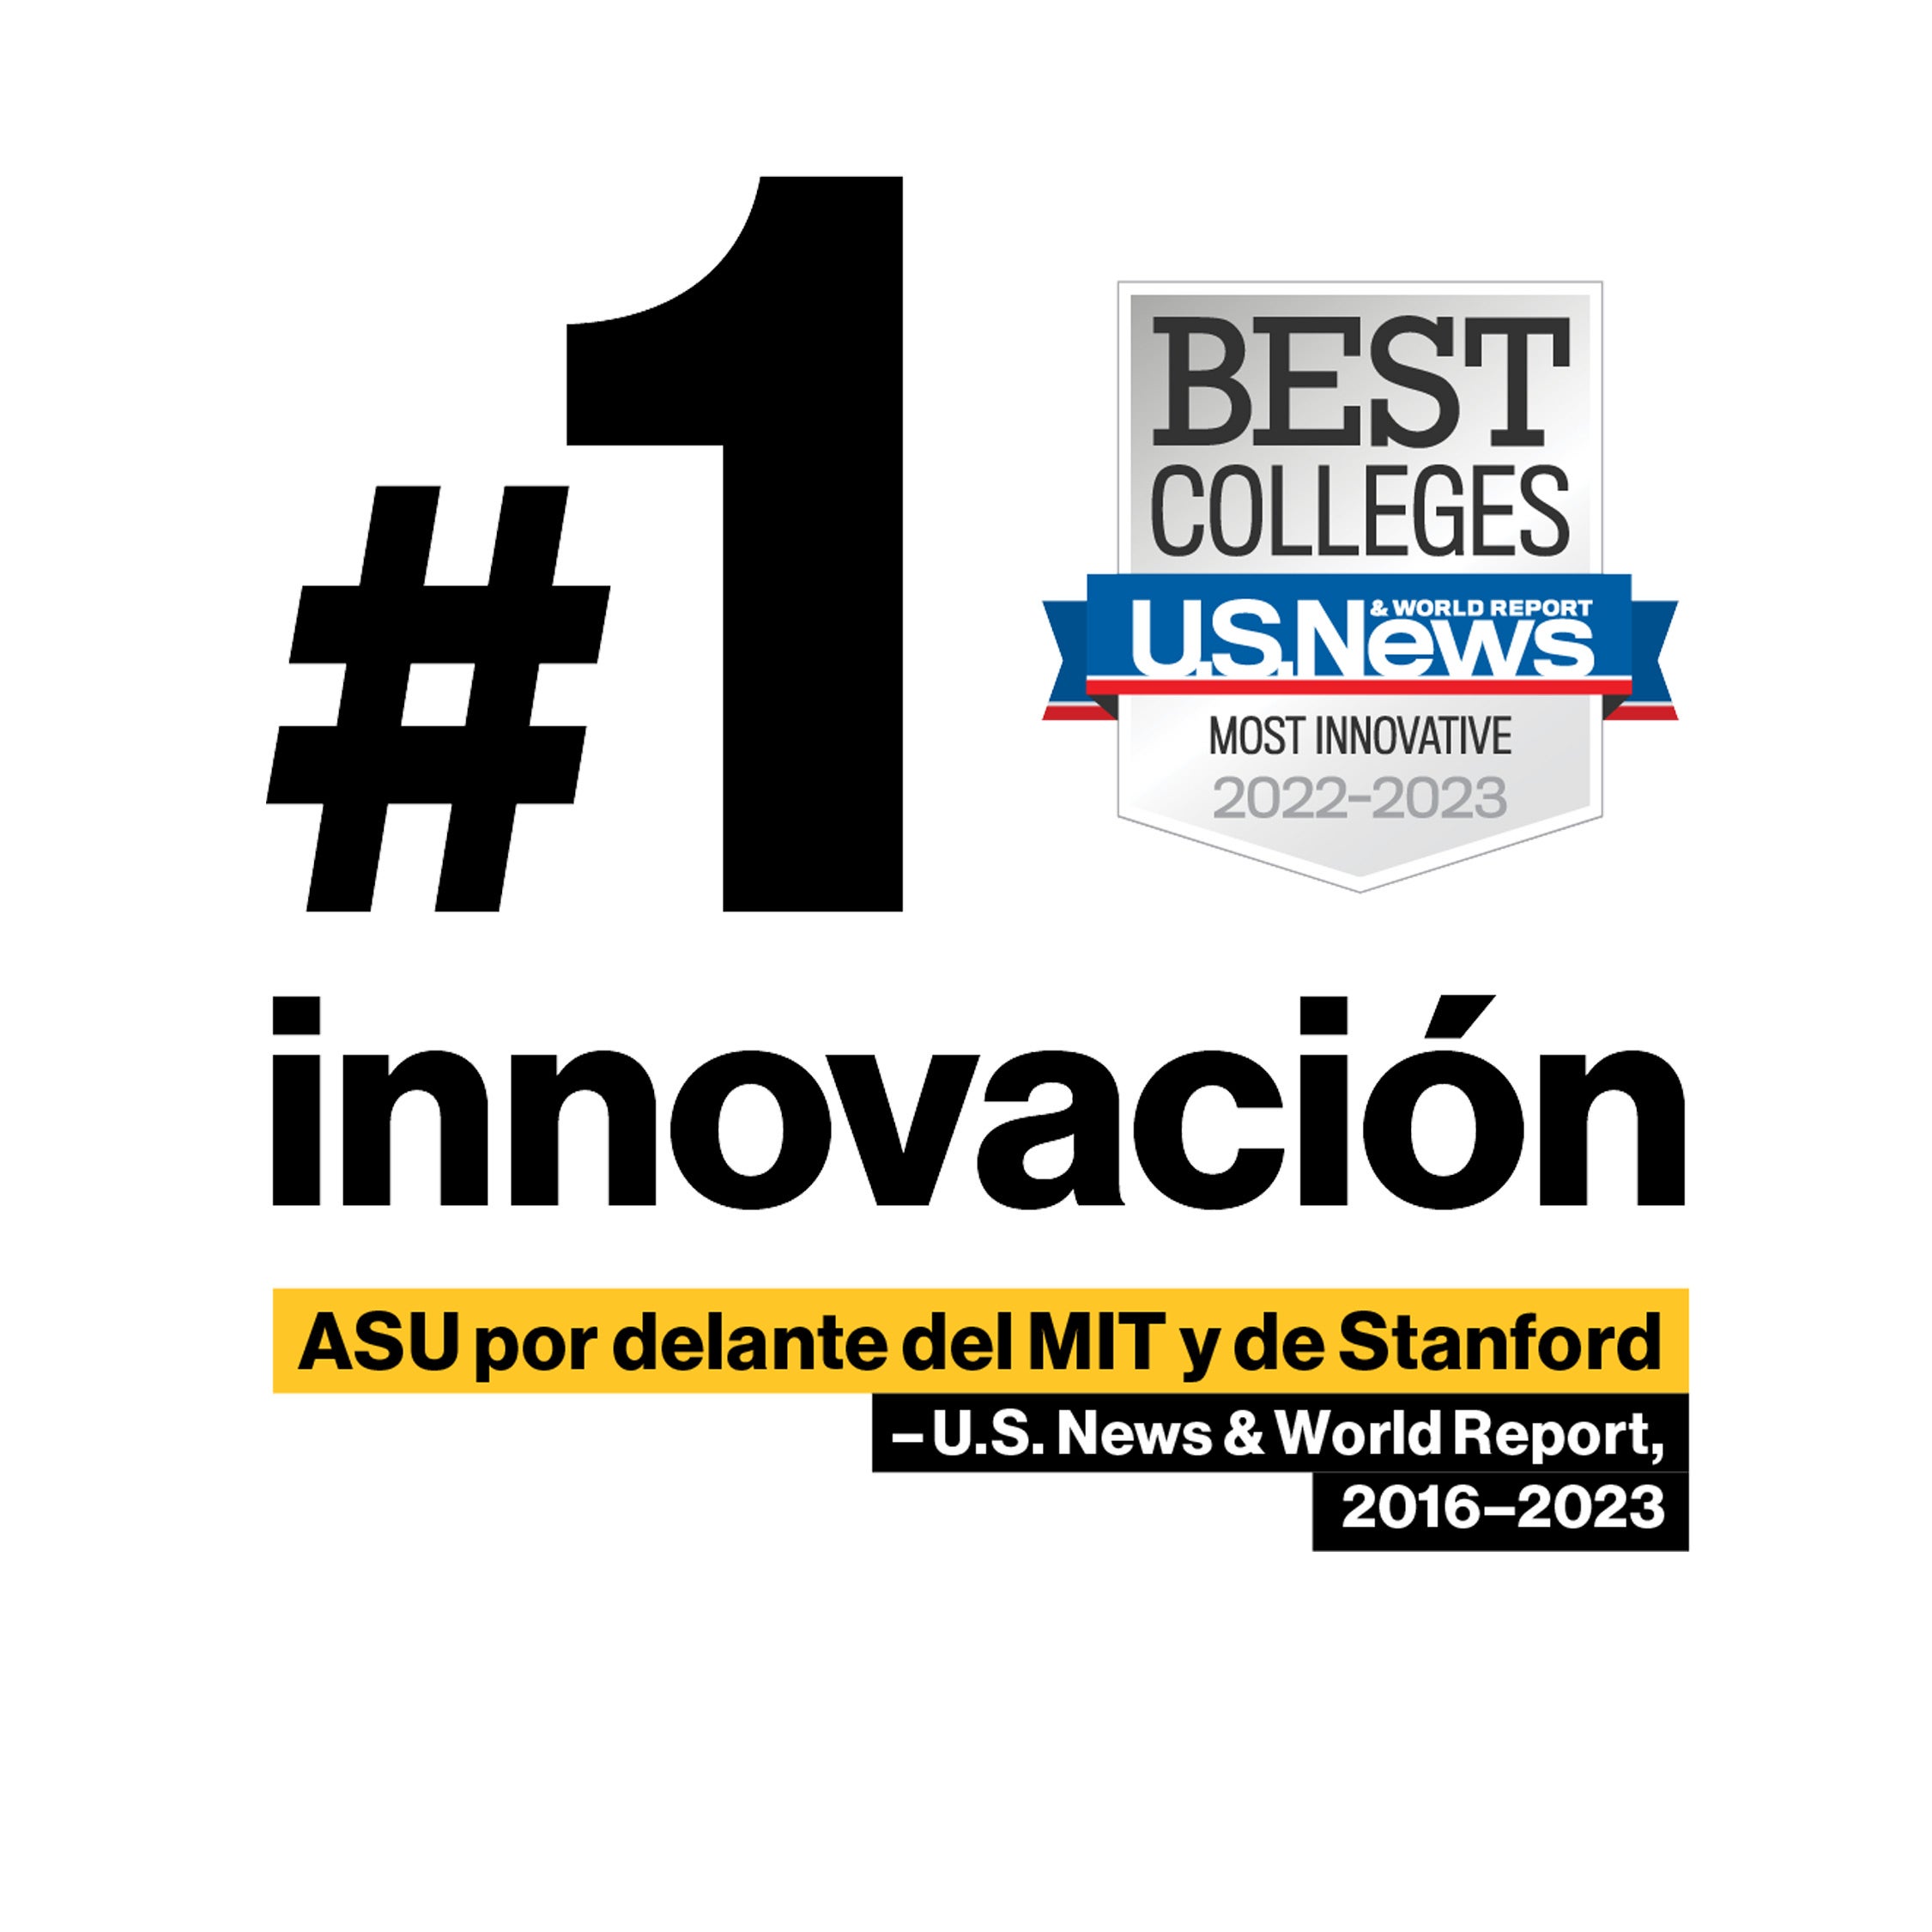 #1 innovacion